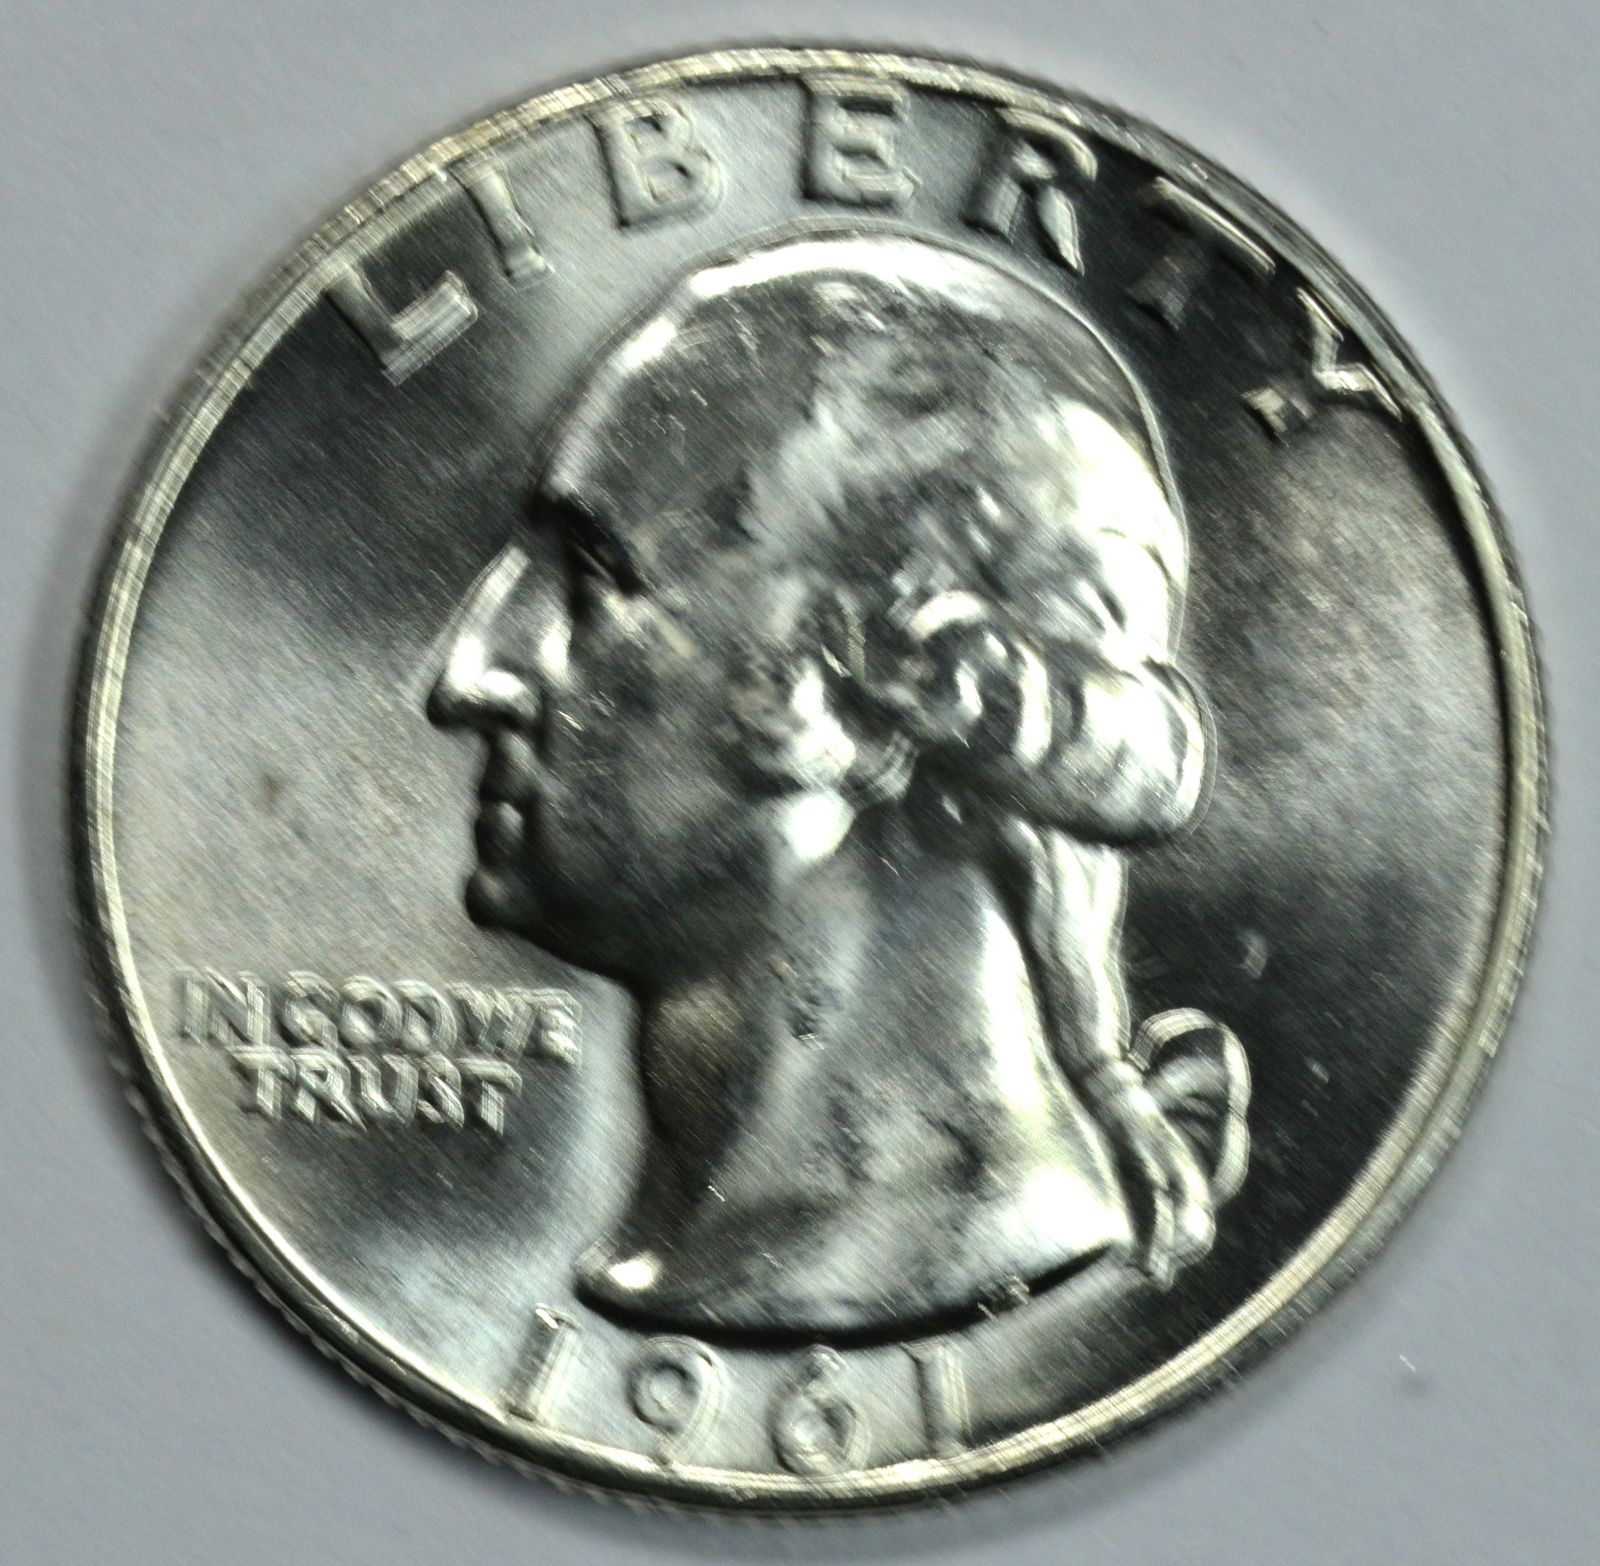 1961 P Washington uncirculated silver quarter BU - $12.50